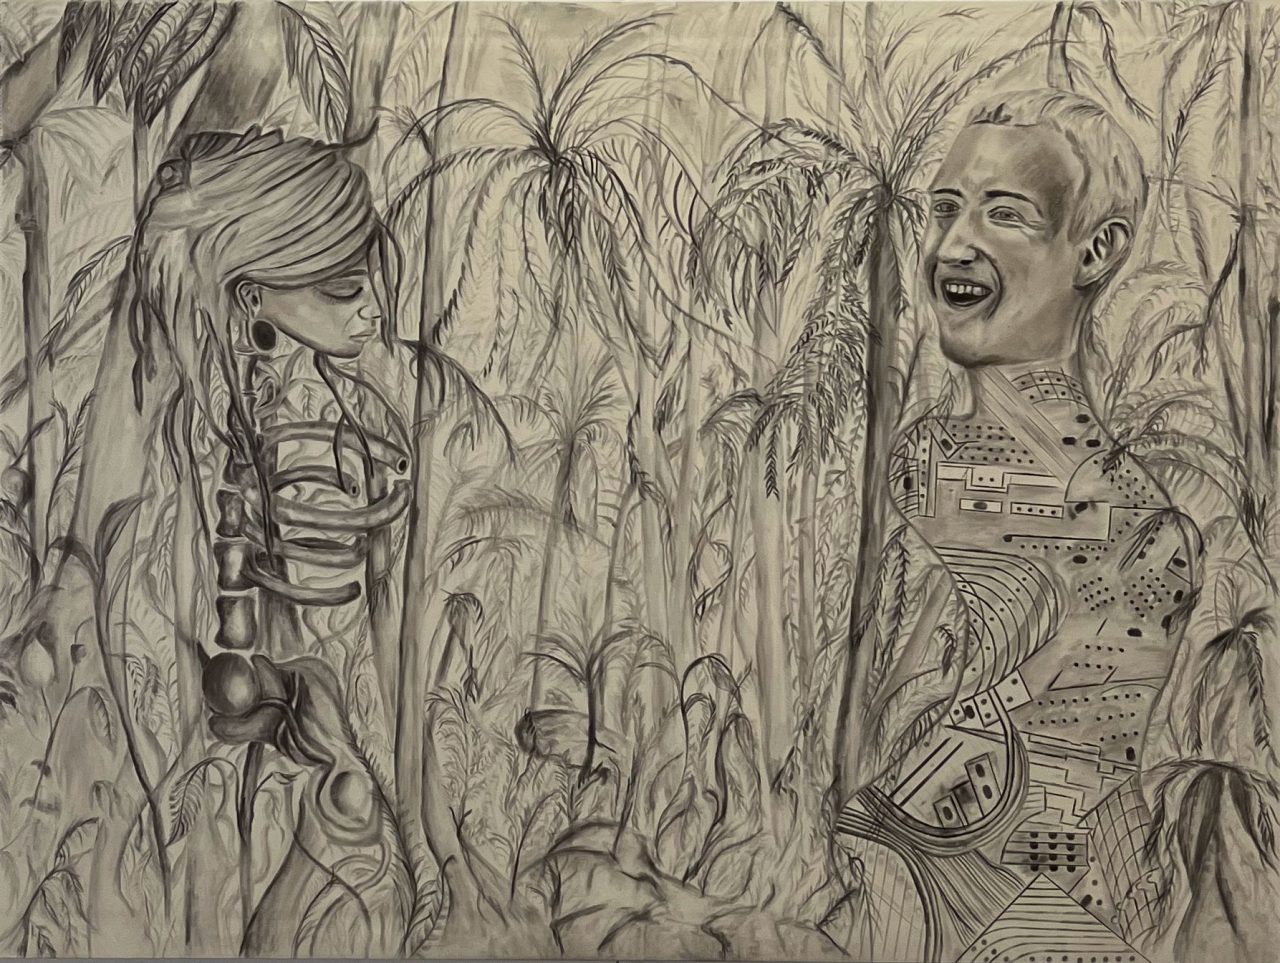 Joel Coleman artwork featuring two figures